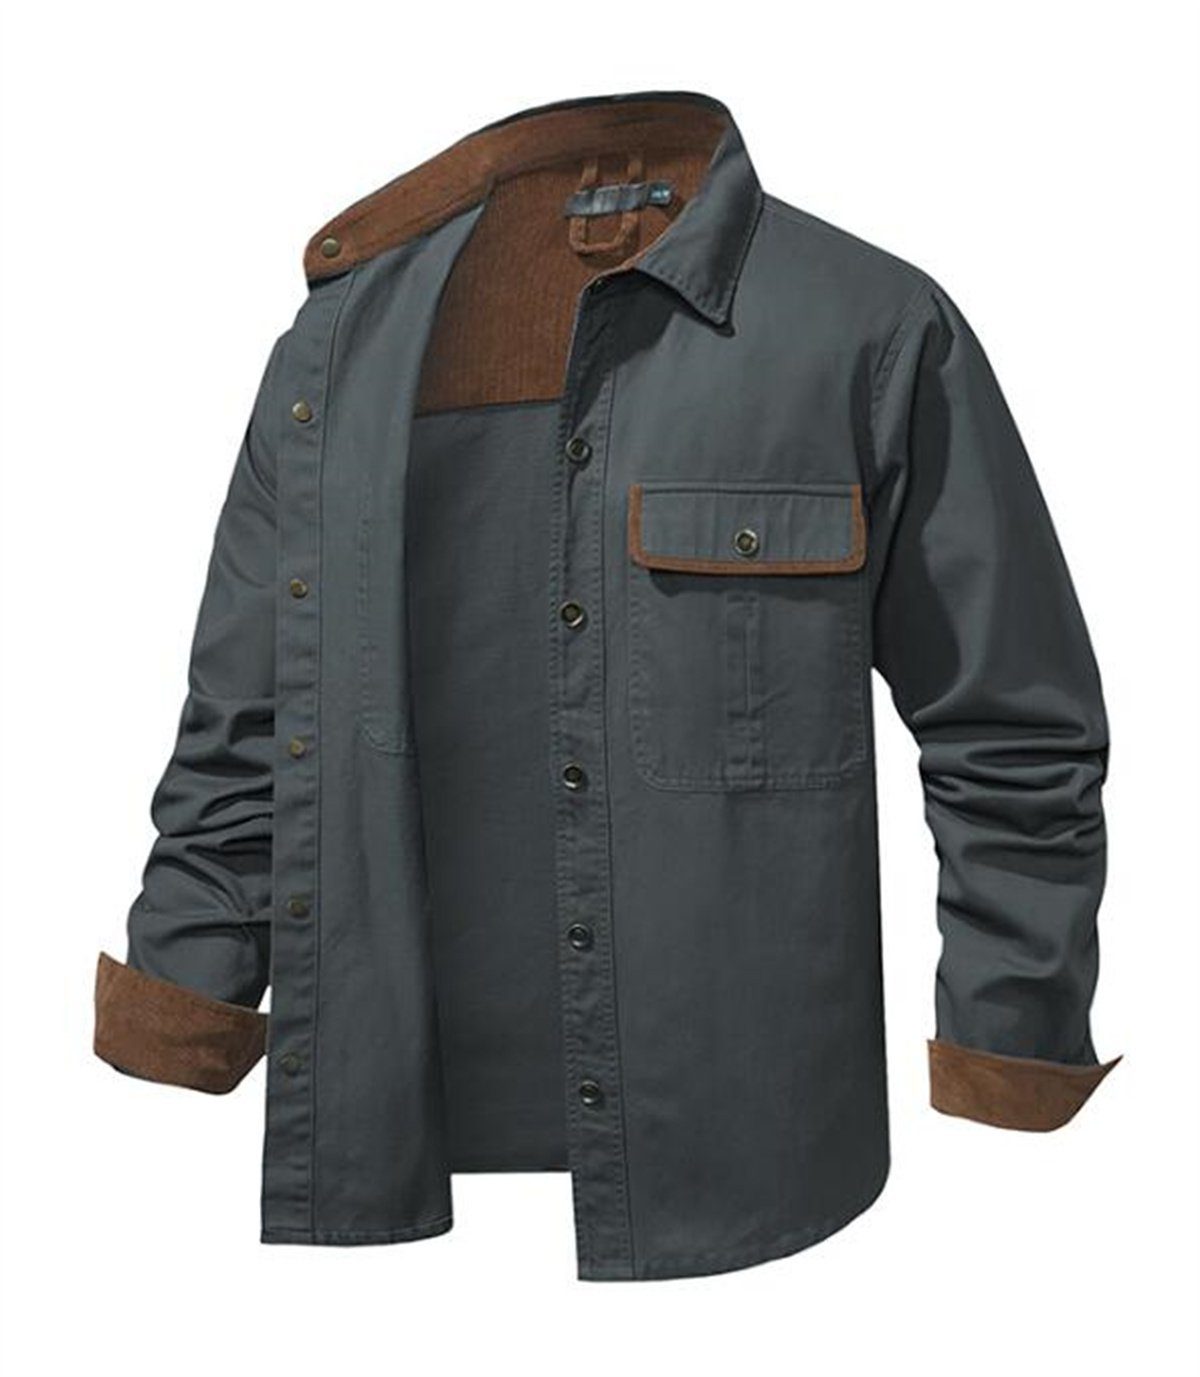 Discaver Sweatshirt Übergroßes, übergroßes mit grau Kragen in aus Cord Hemd Kontrastfarbe